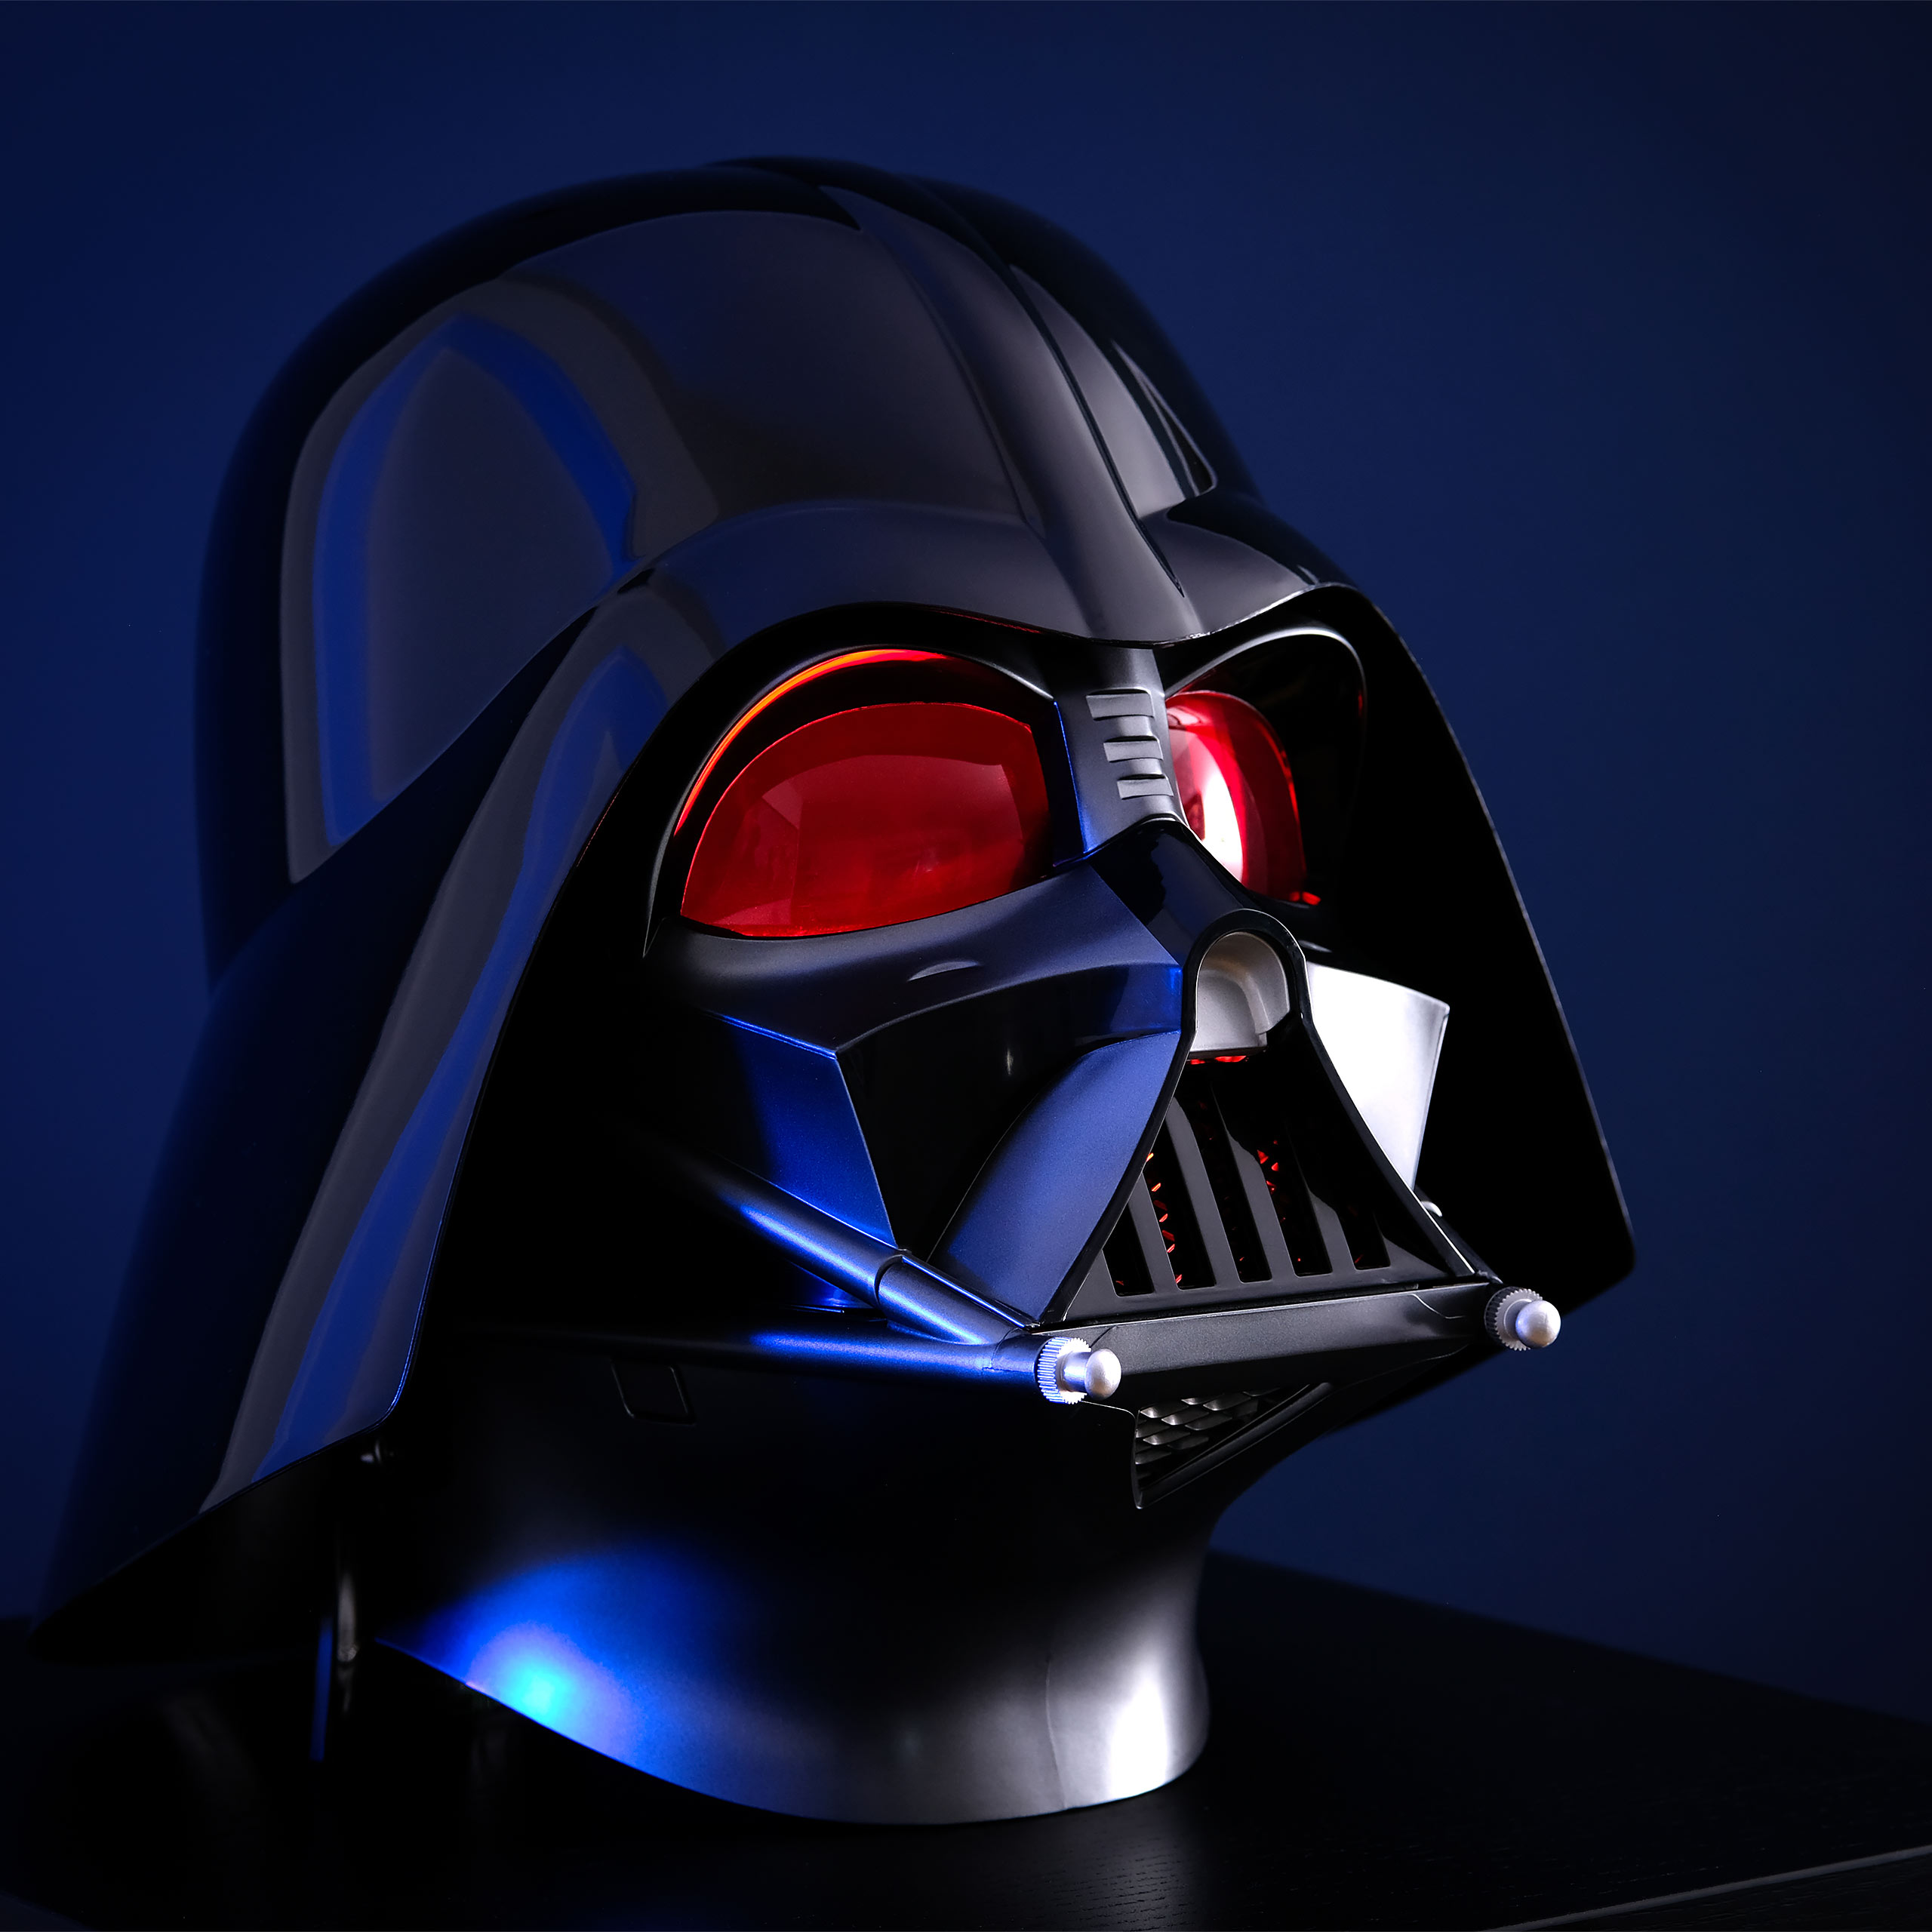 Darth Vader helmet replica with sound effects - Star Wars